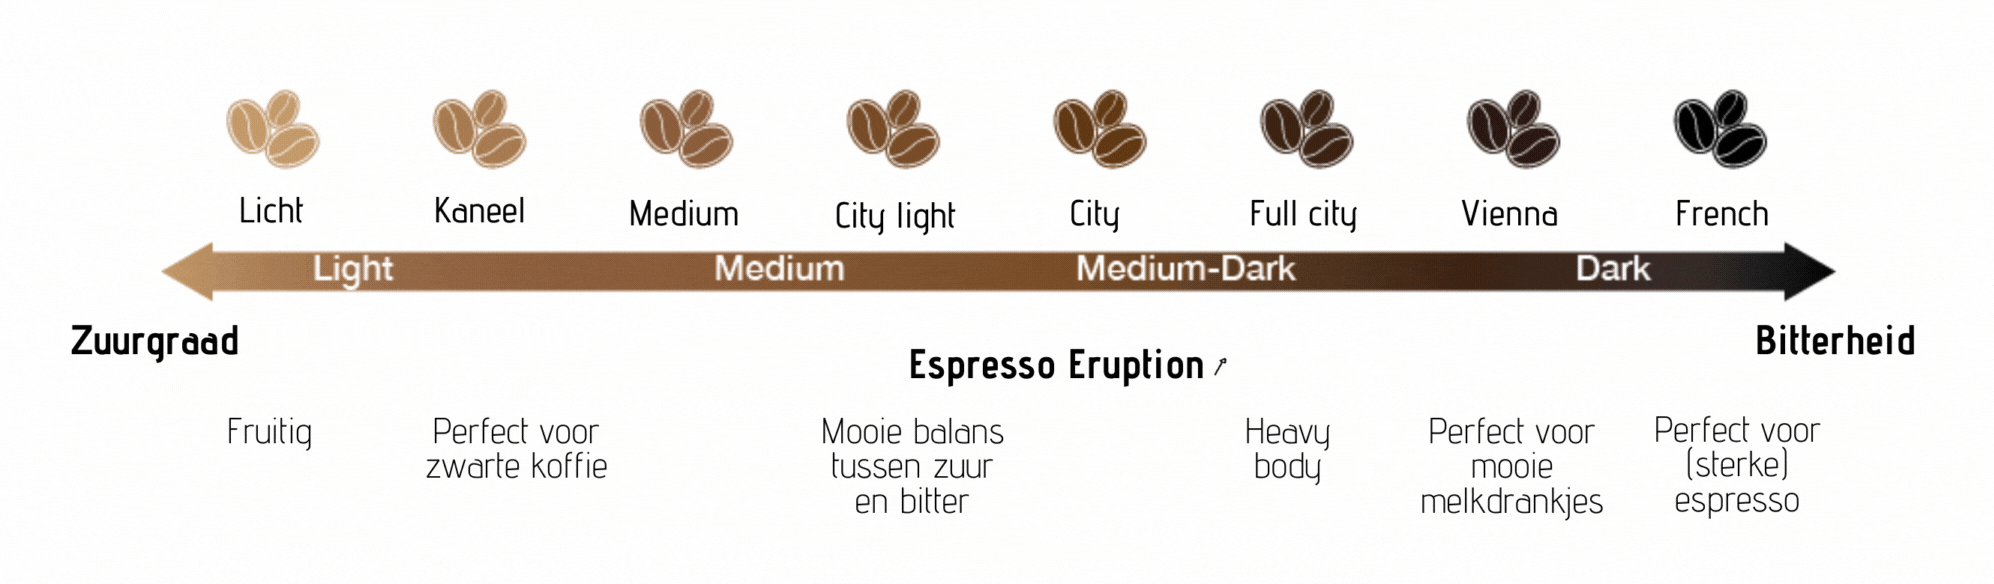 Brandindicator Espresso Eruption koffie: Medium dark